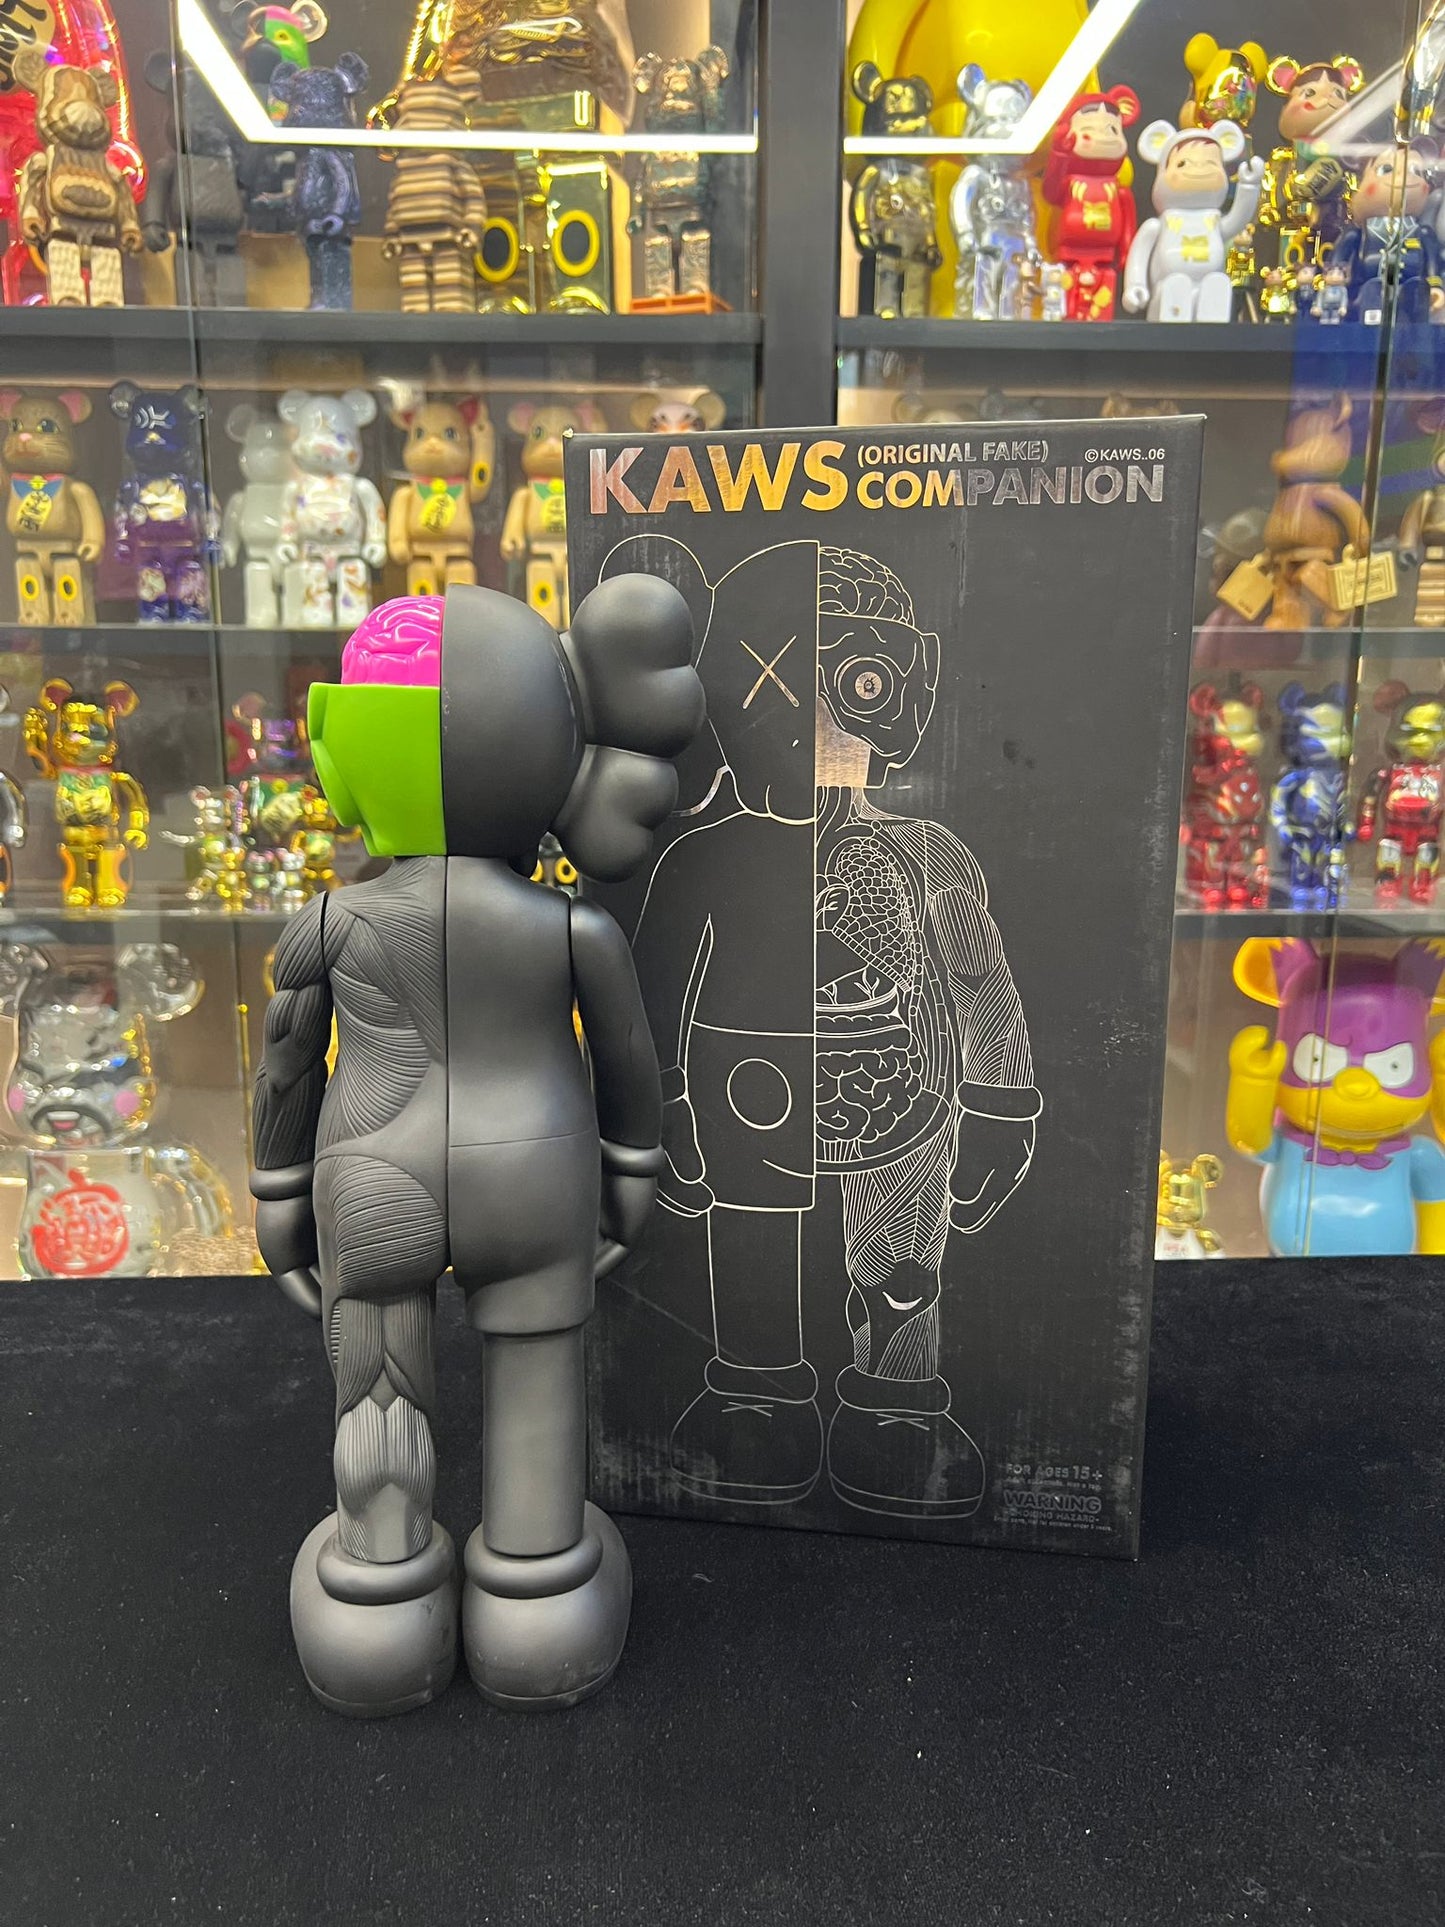 Kaws Companion (Original Fake) 2006 Demi-solution noire